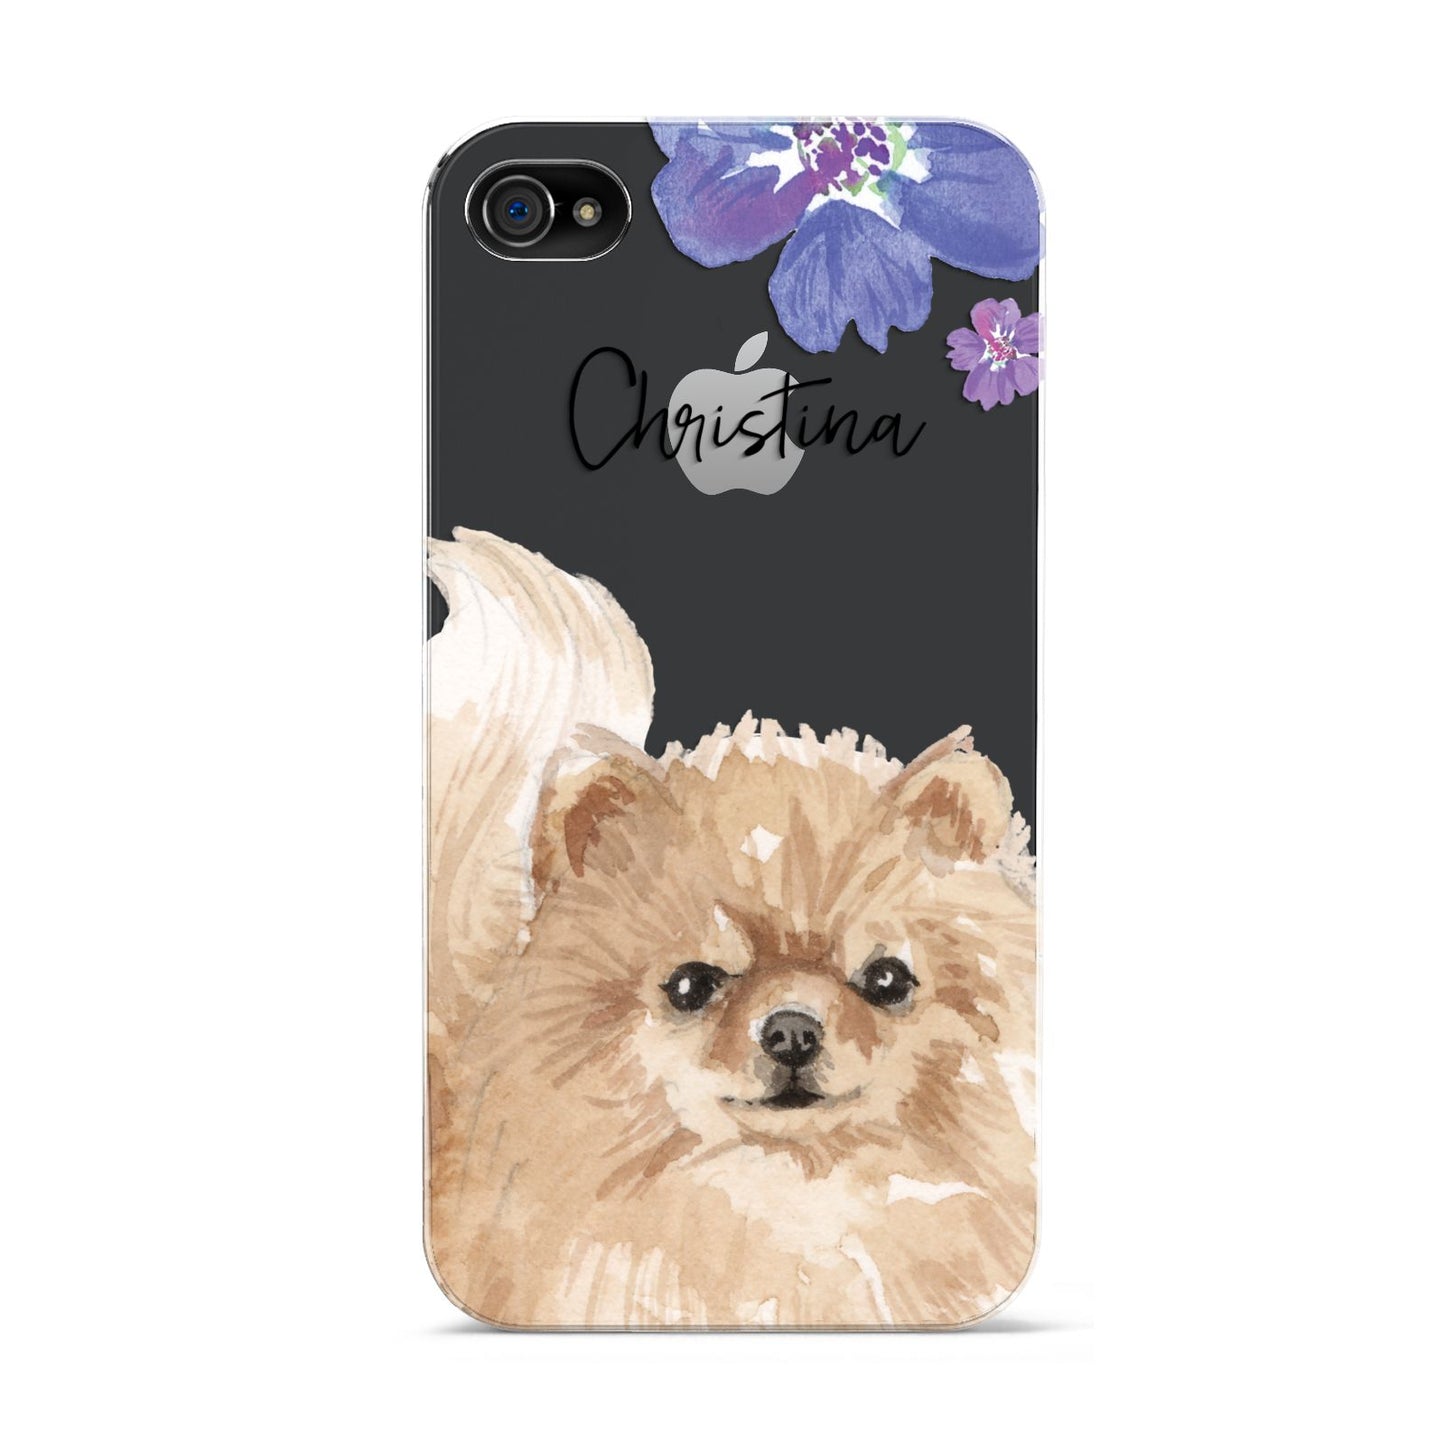 Personalised Pomeranian Apple iPhone 4s Case